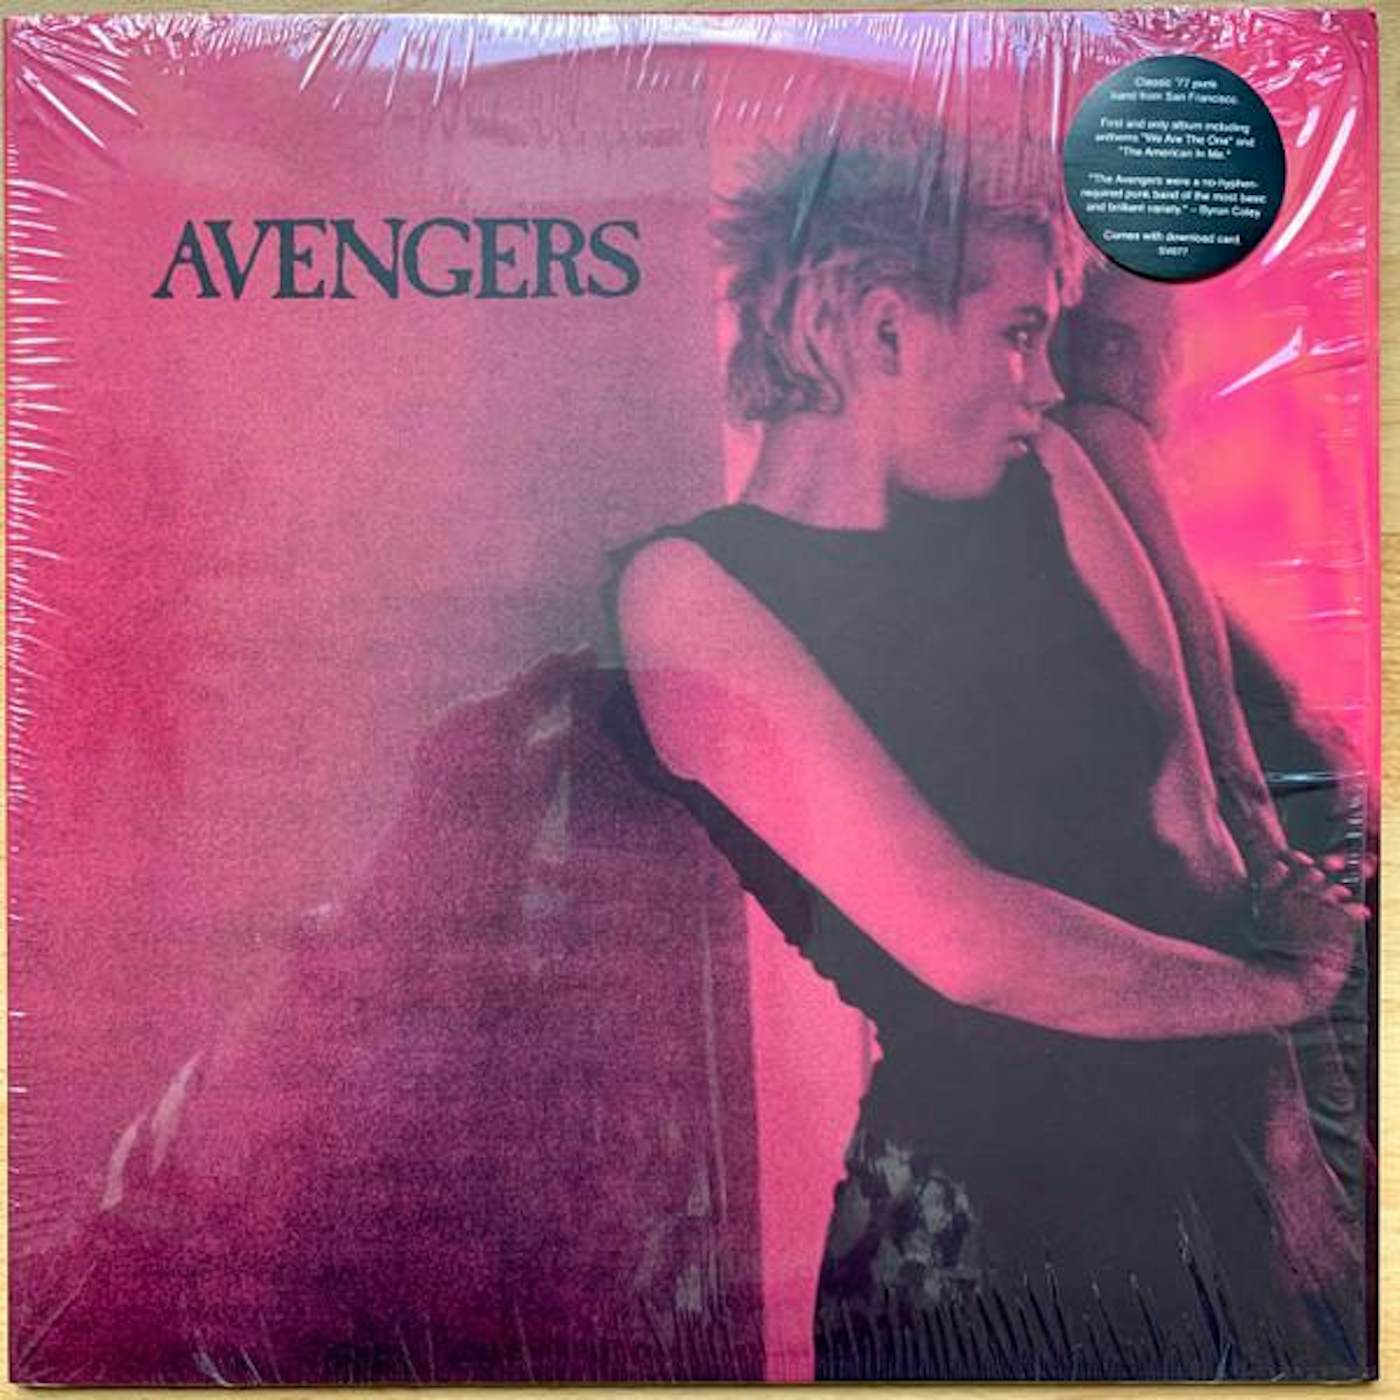 AVENGERS S/T Vinyl Record